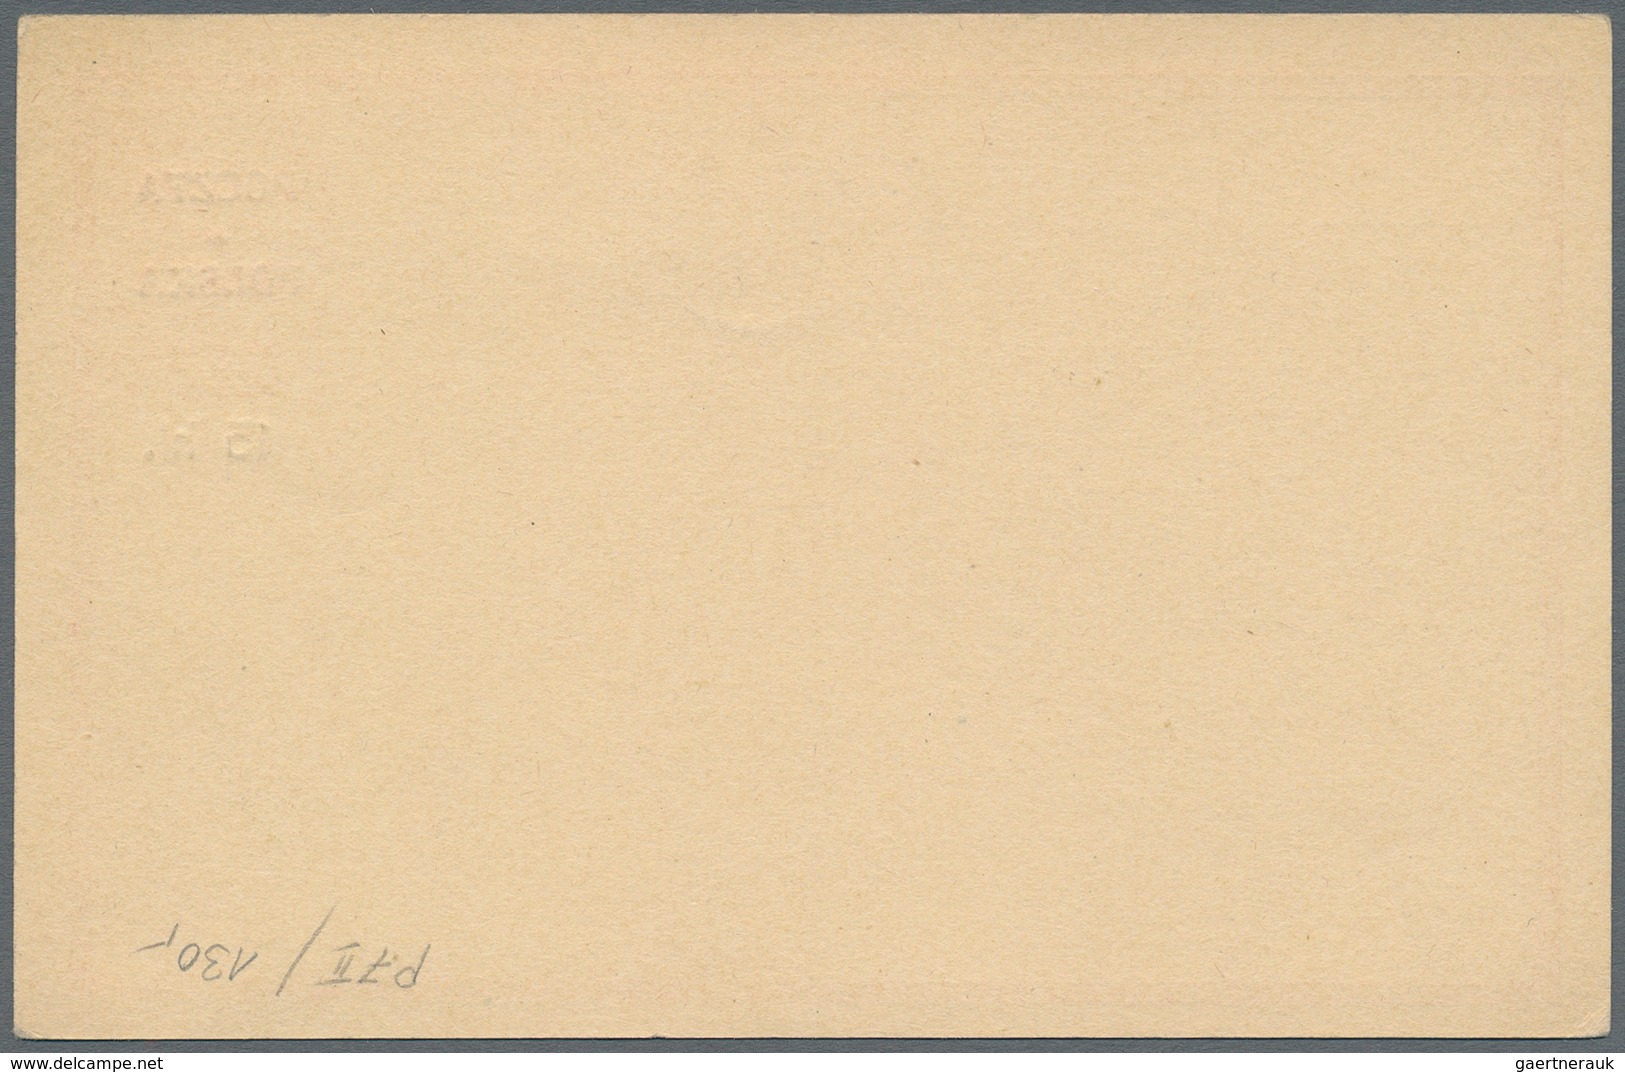 Polen - Ganzsachen: 1919 Unused Postal Stationery Card, Original Card Of Austria P 217 With Overprin - Entiers Postaux